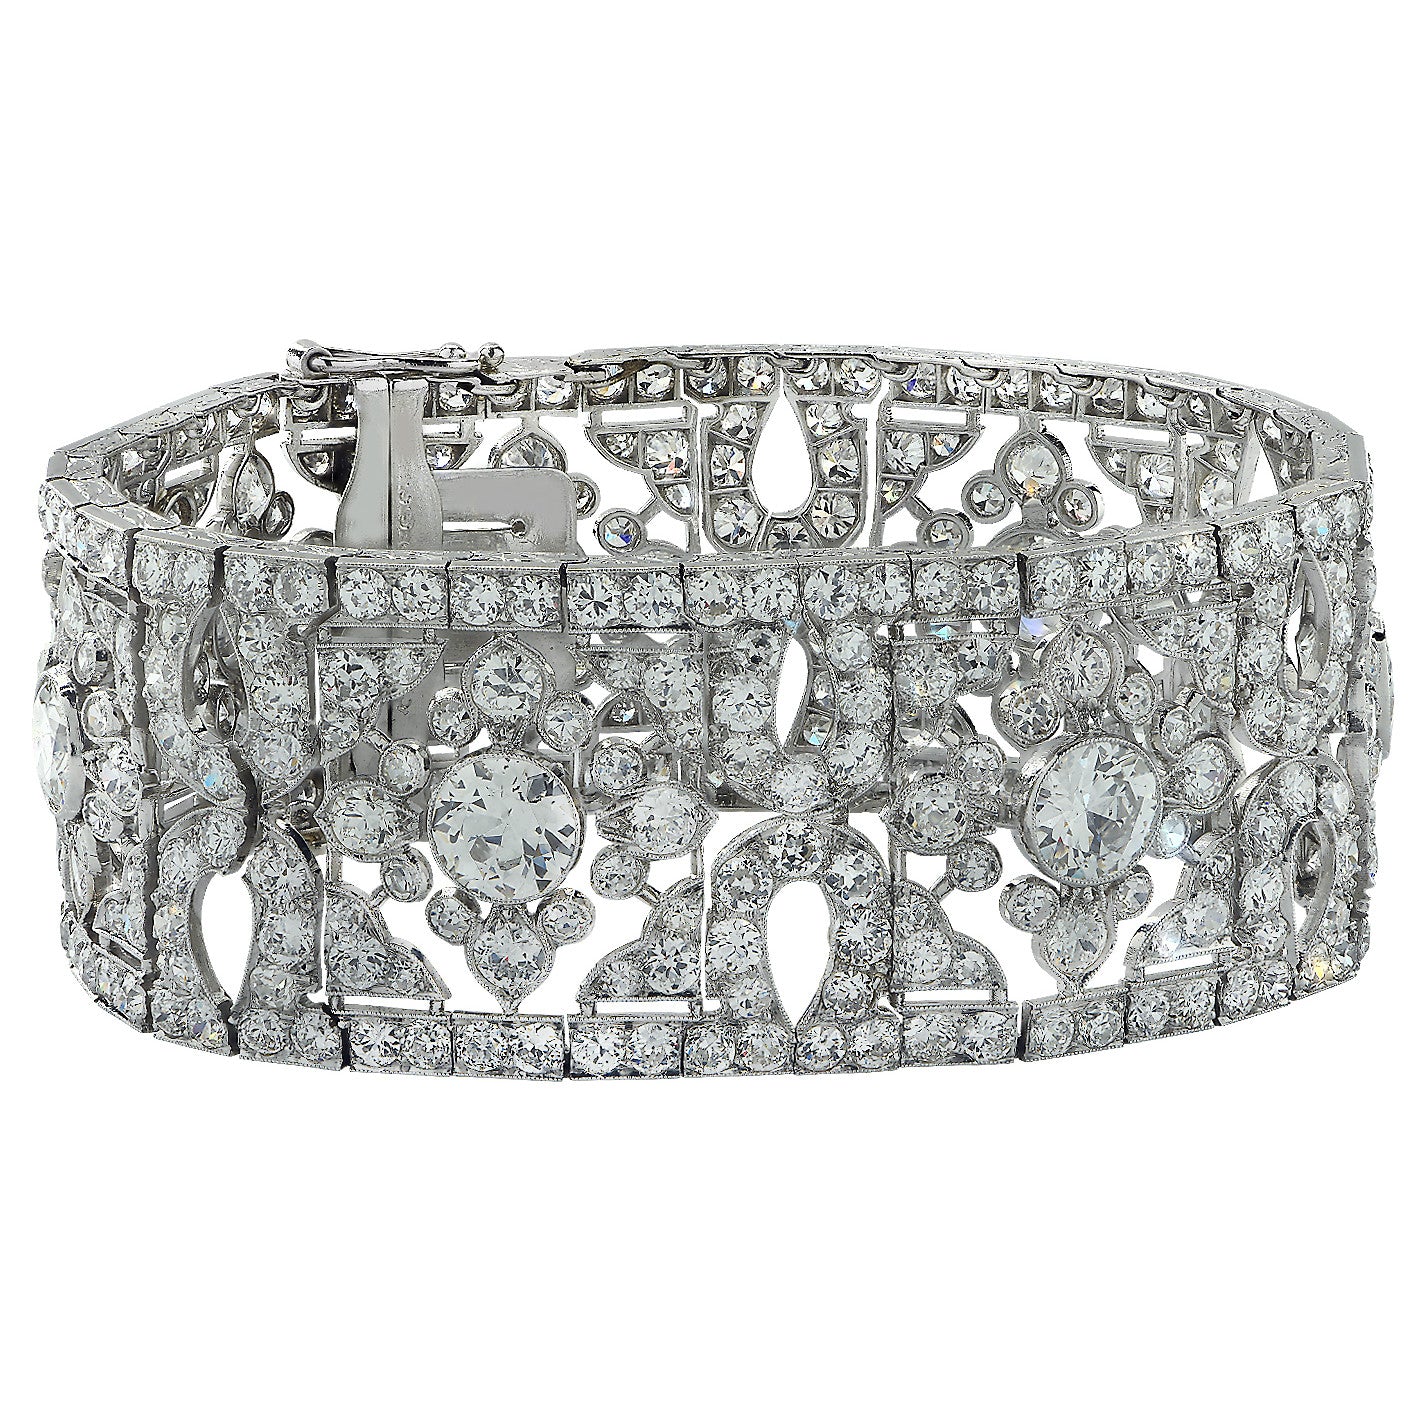 Cartier French Belle Epoque Platinum Diamond Bracelet side view